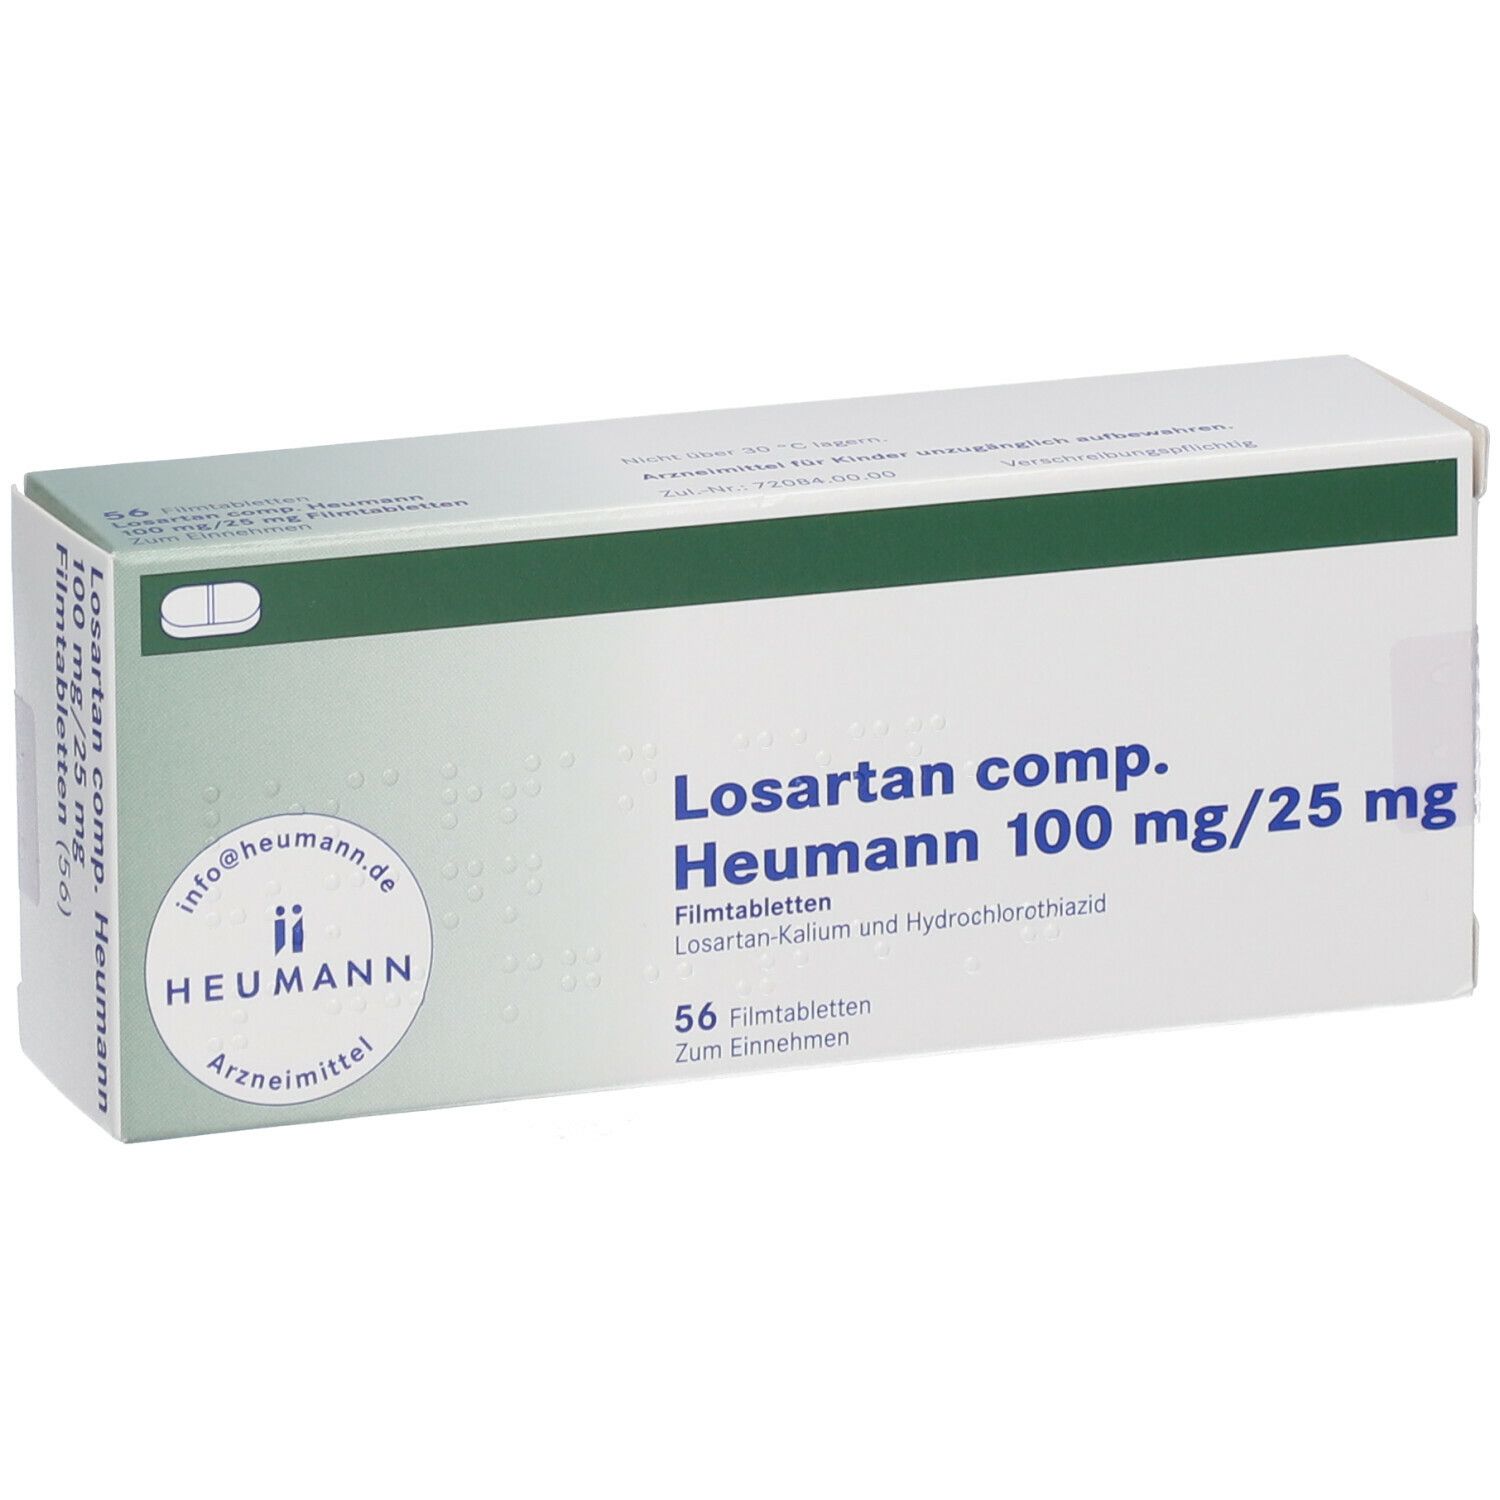 Losartan comp. Heumann 100 mg/25 mg